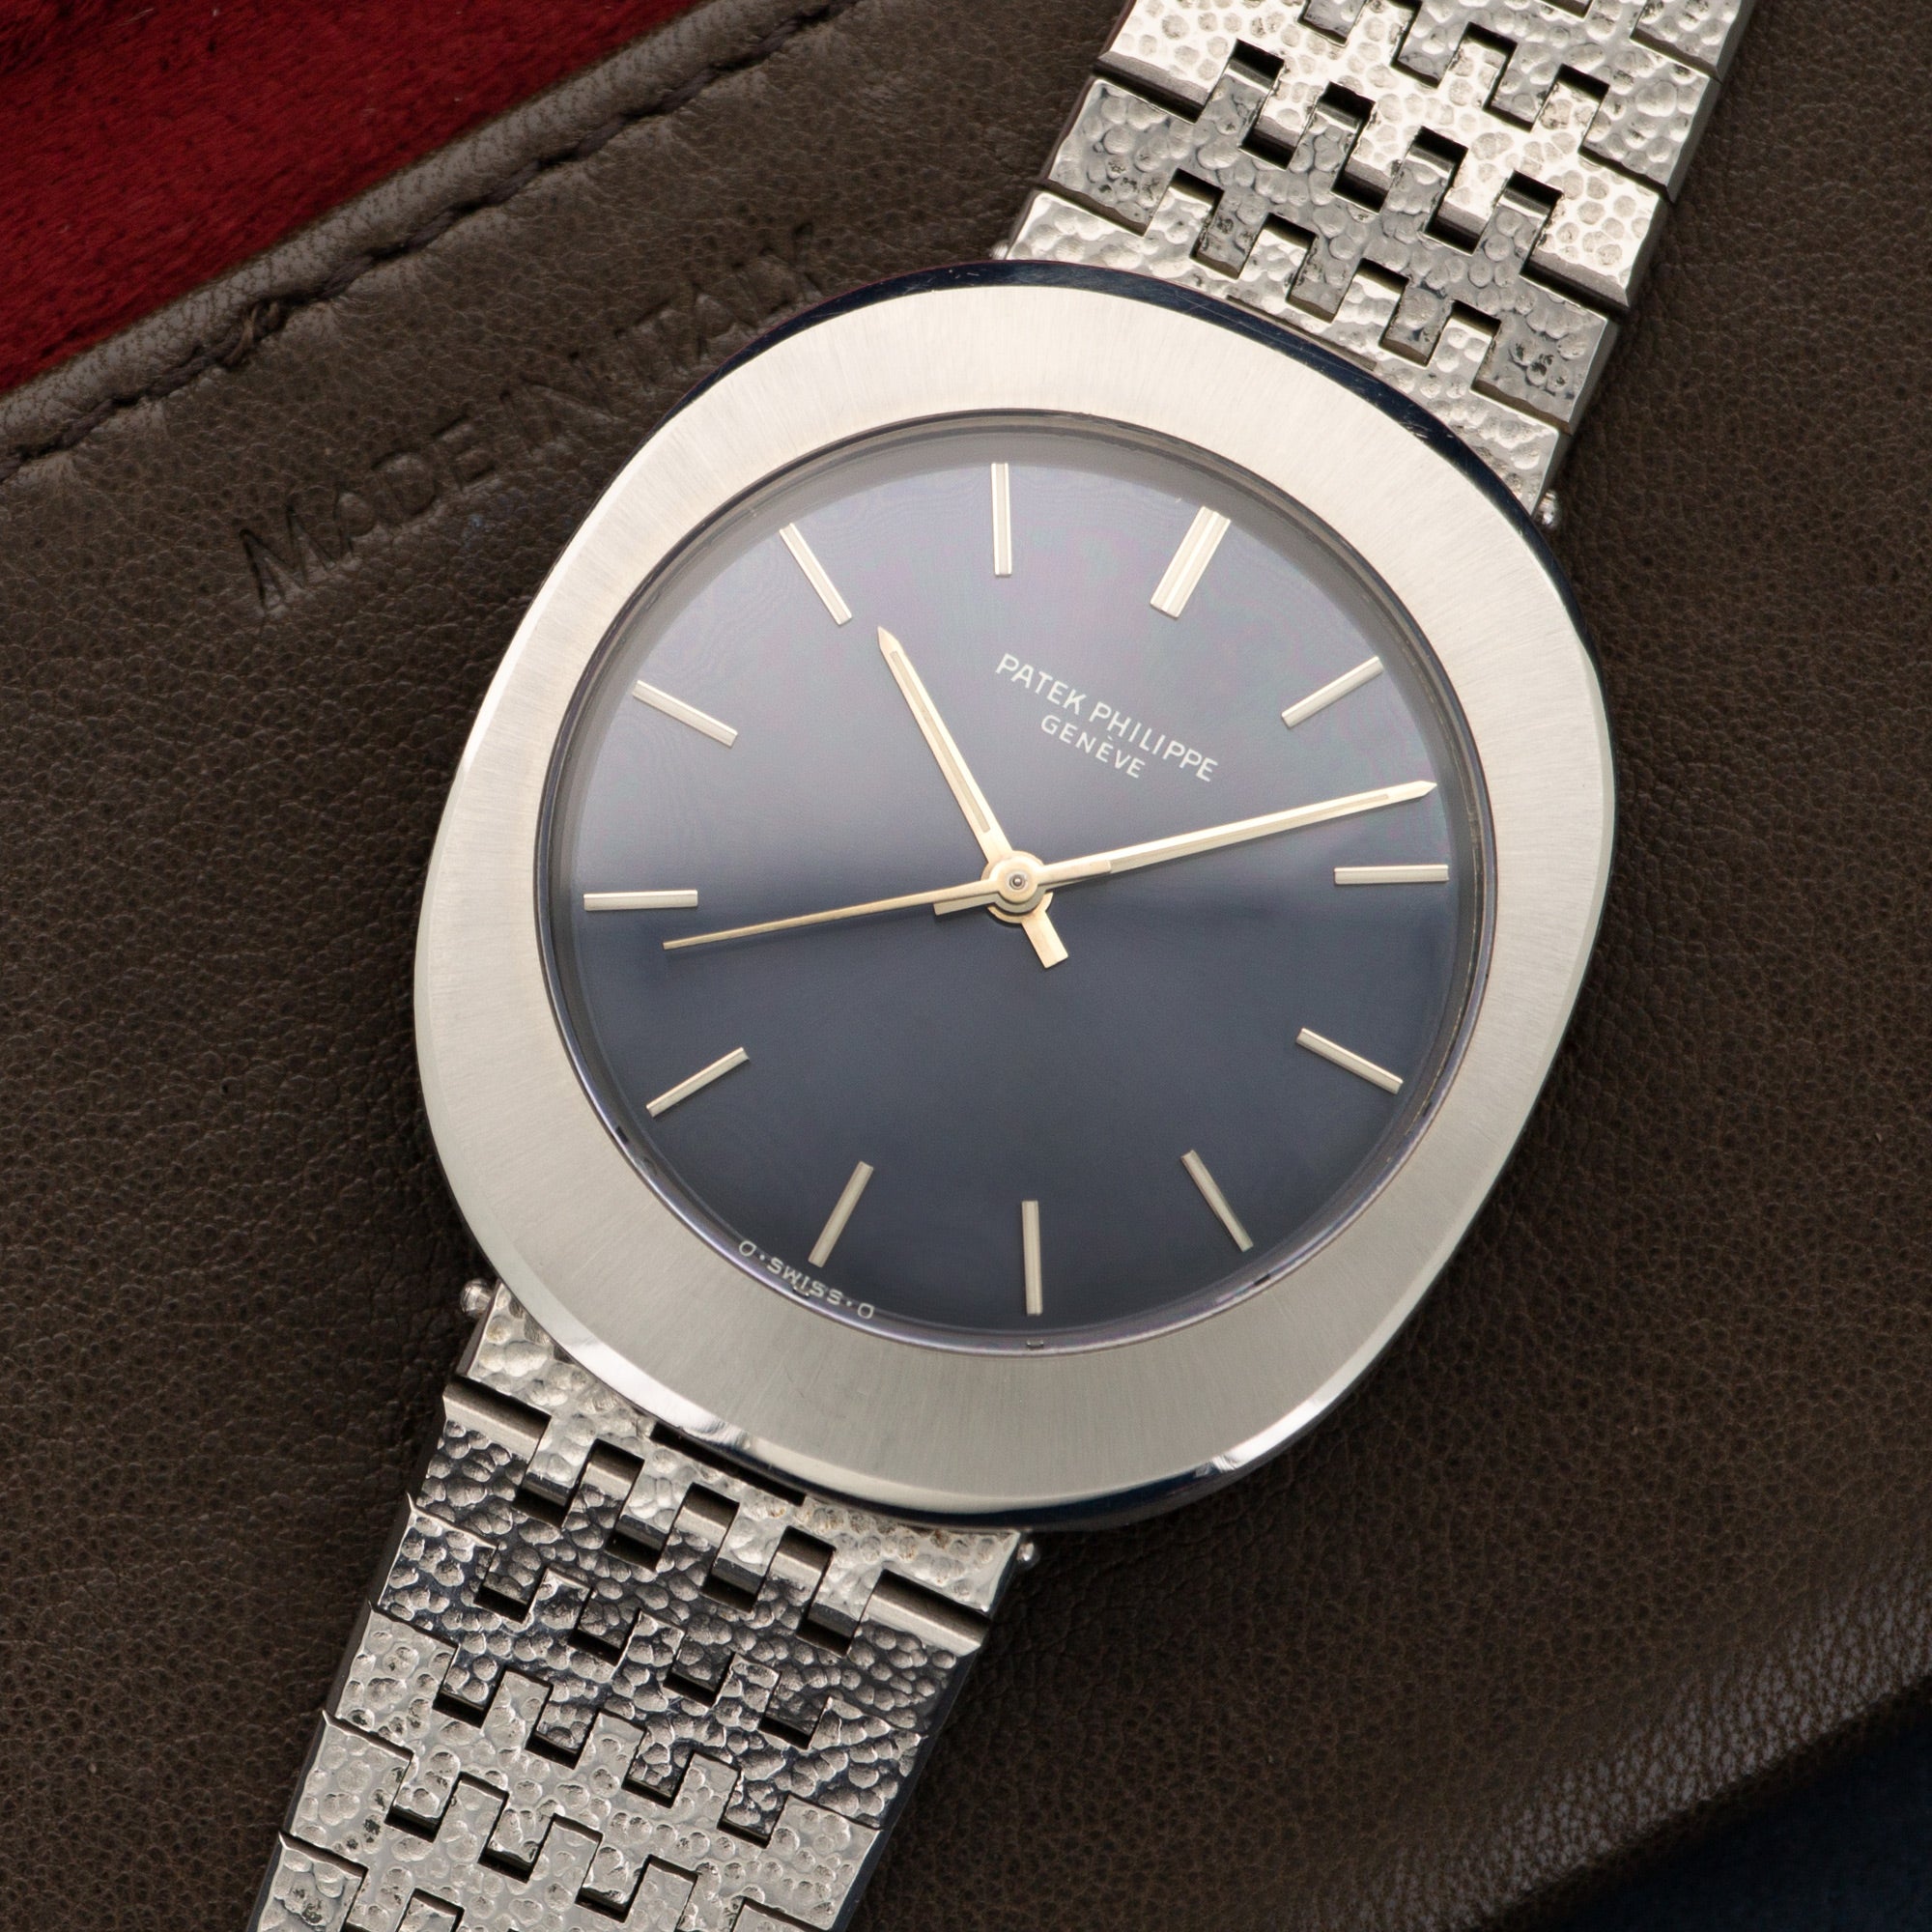 Patek Philippe - Patek Philippe Stainless Steel Automatic Bracelet Watch Ref. 3580 - The Keystone Watches